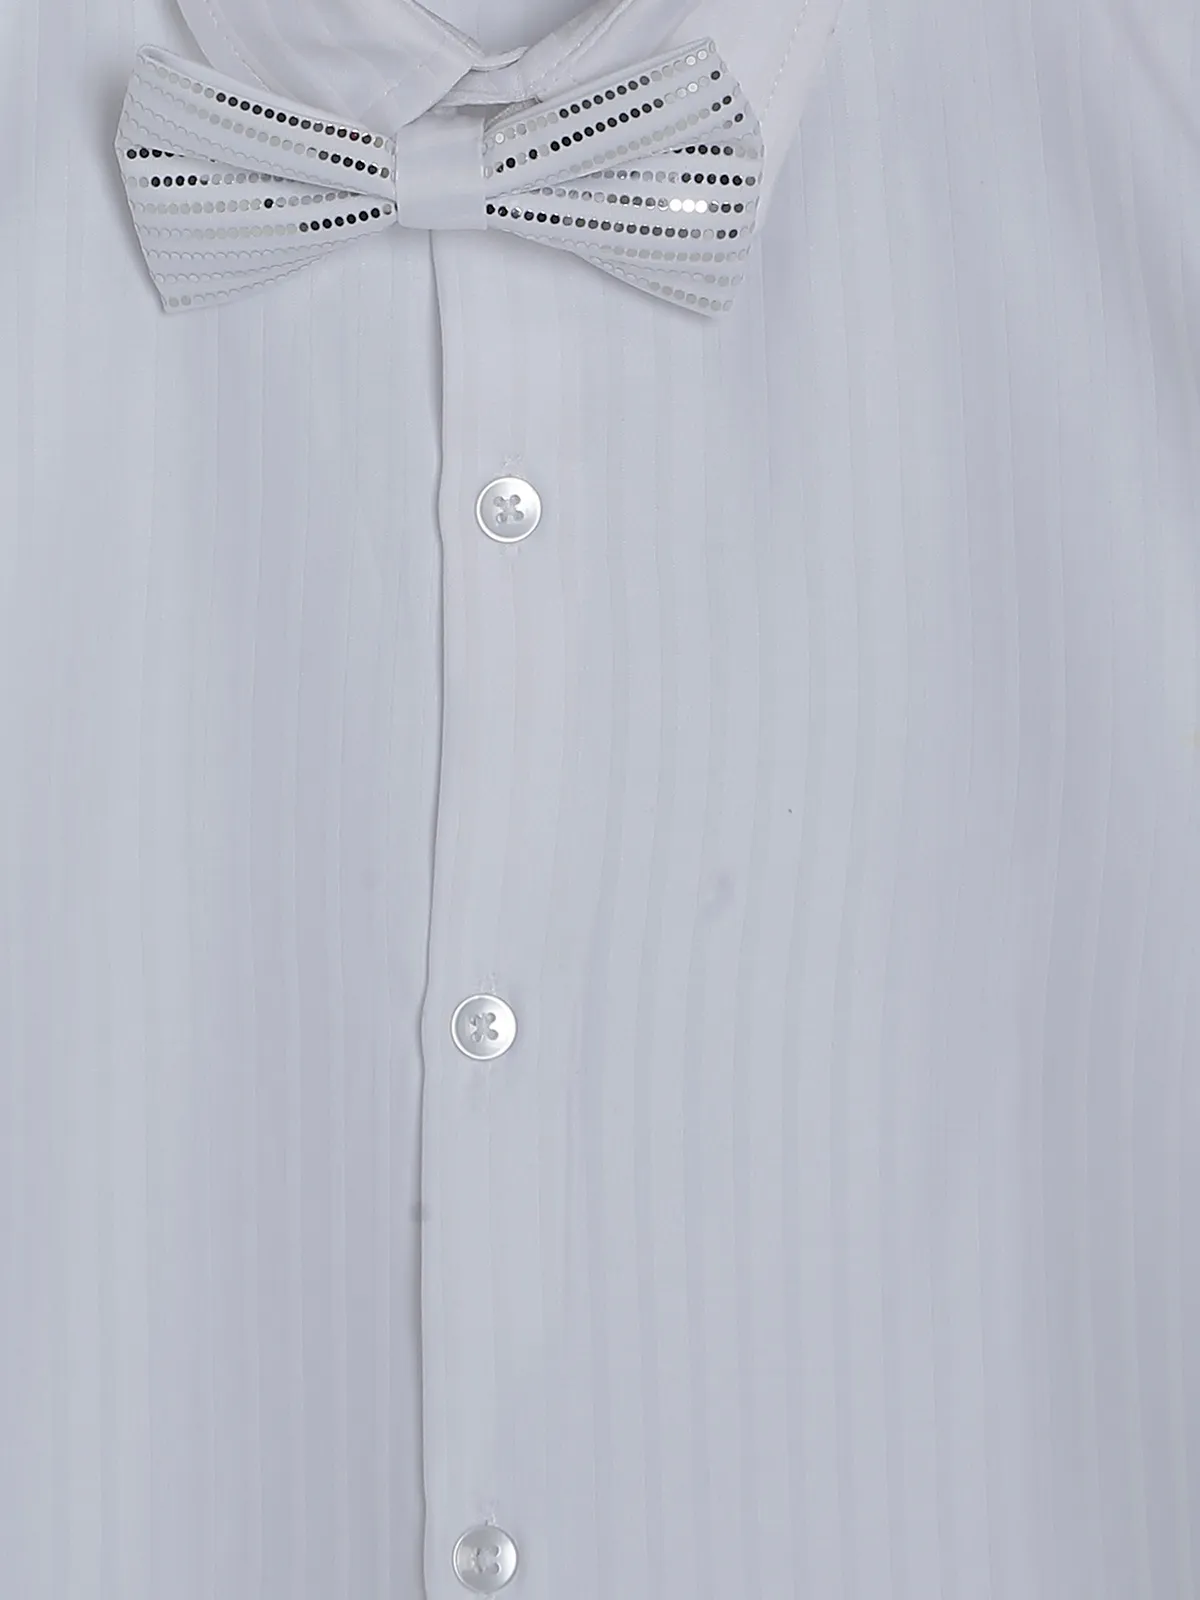 Blazo white cotton shirt with bow